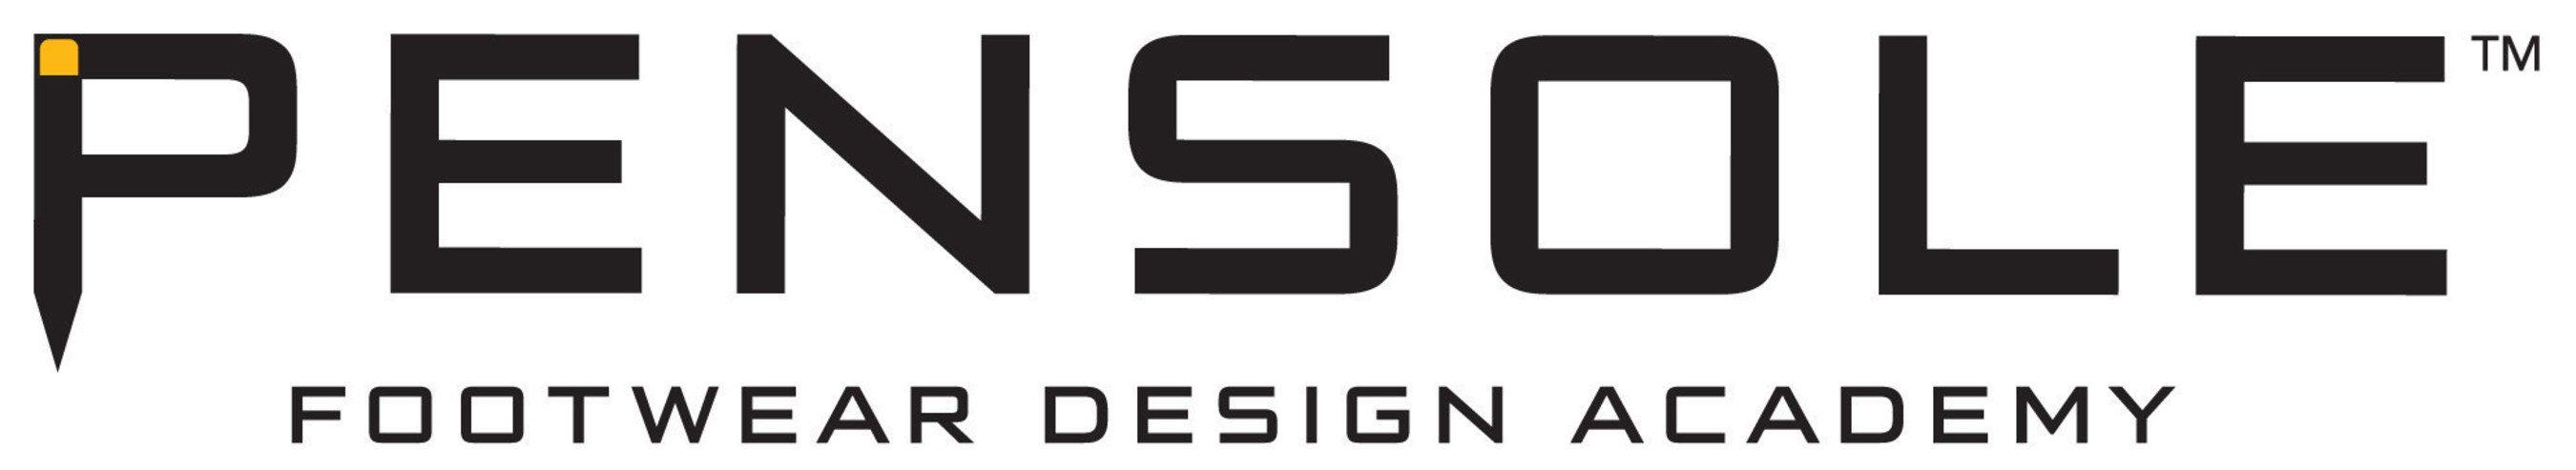 Pensole Footwear Design Academy logo